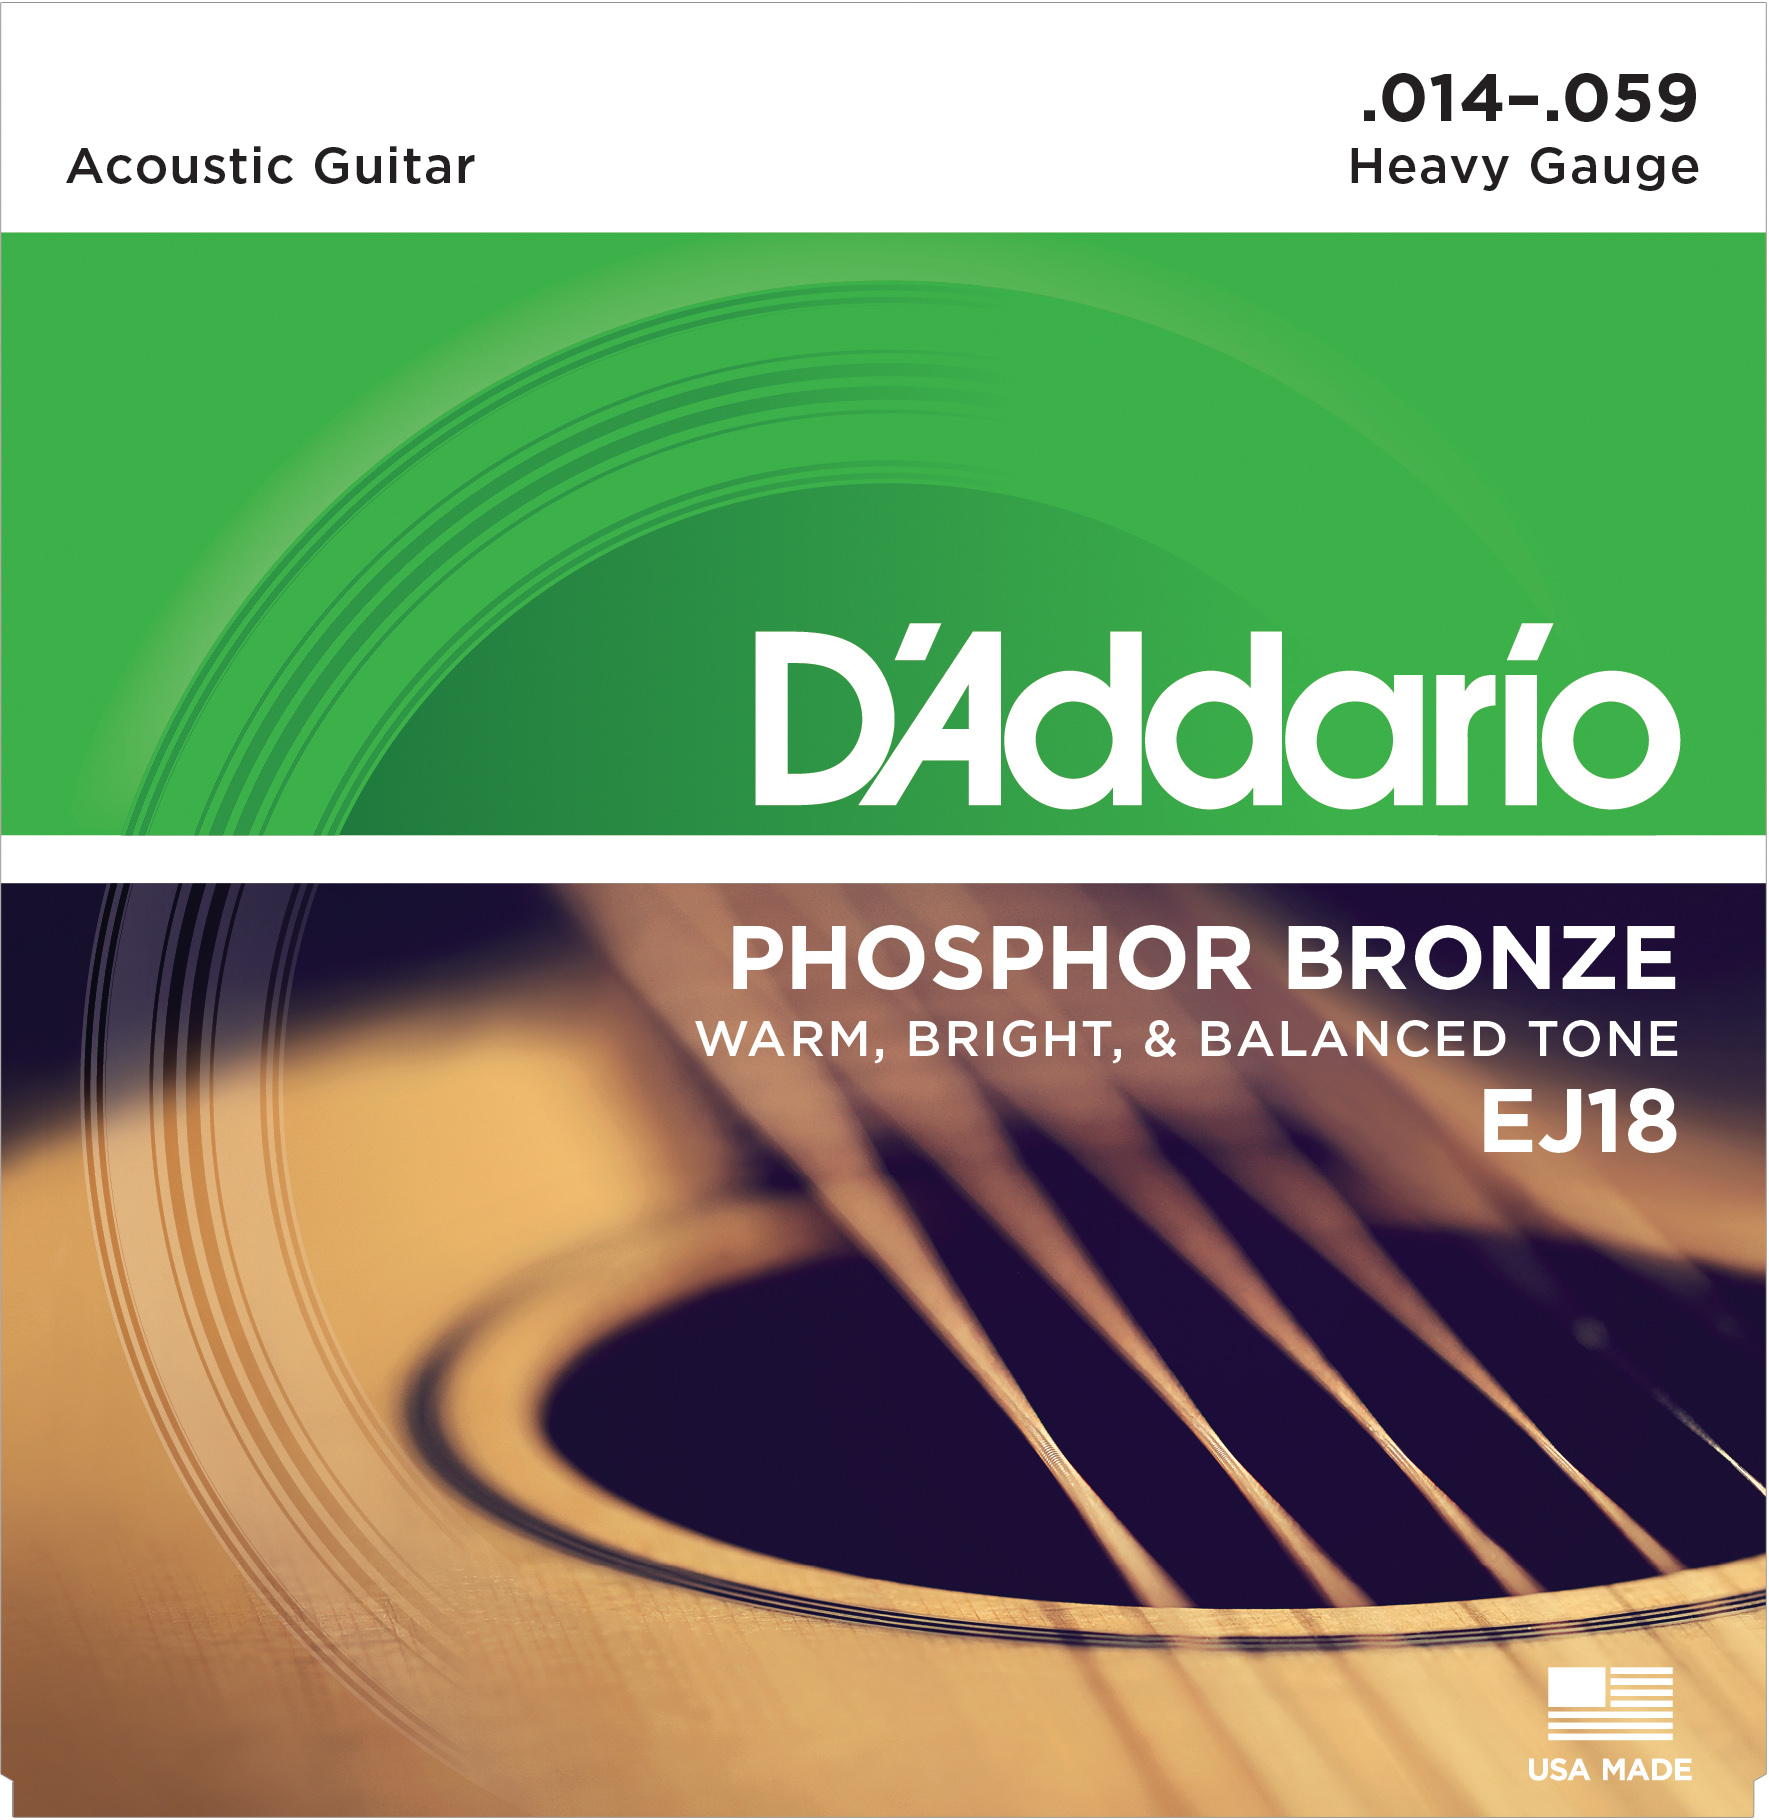 An image of DAddario EJ18 Phosphor Bronze Acoustic Guitar Strings, Heavy, 14-59 | PMT Online